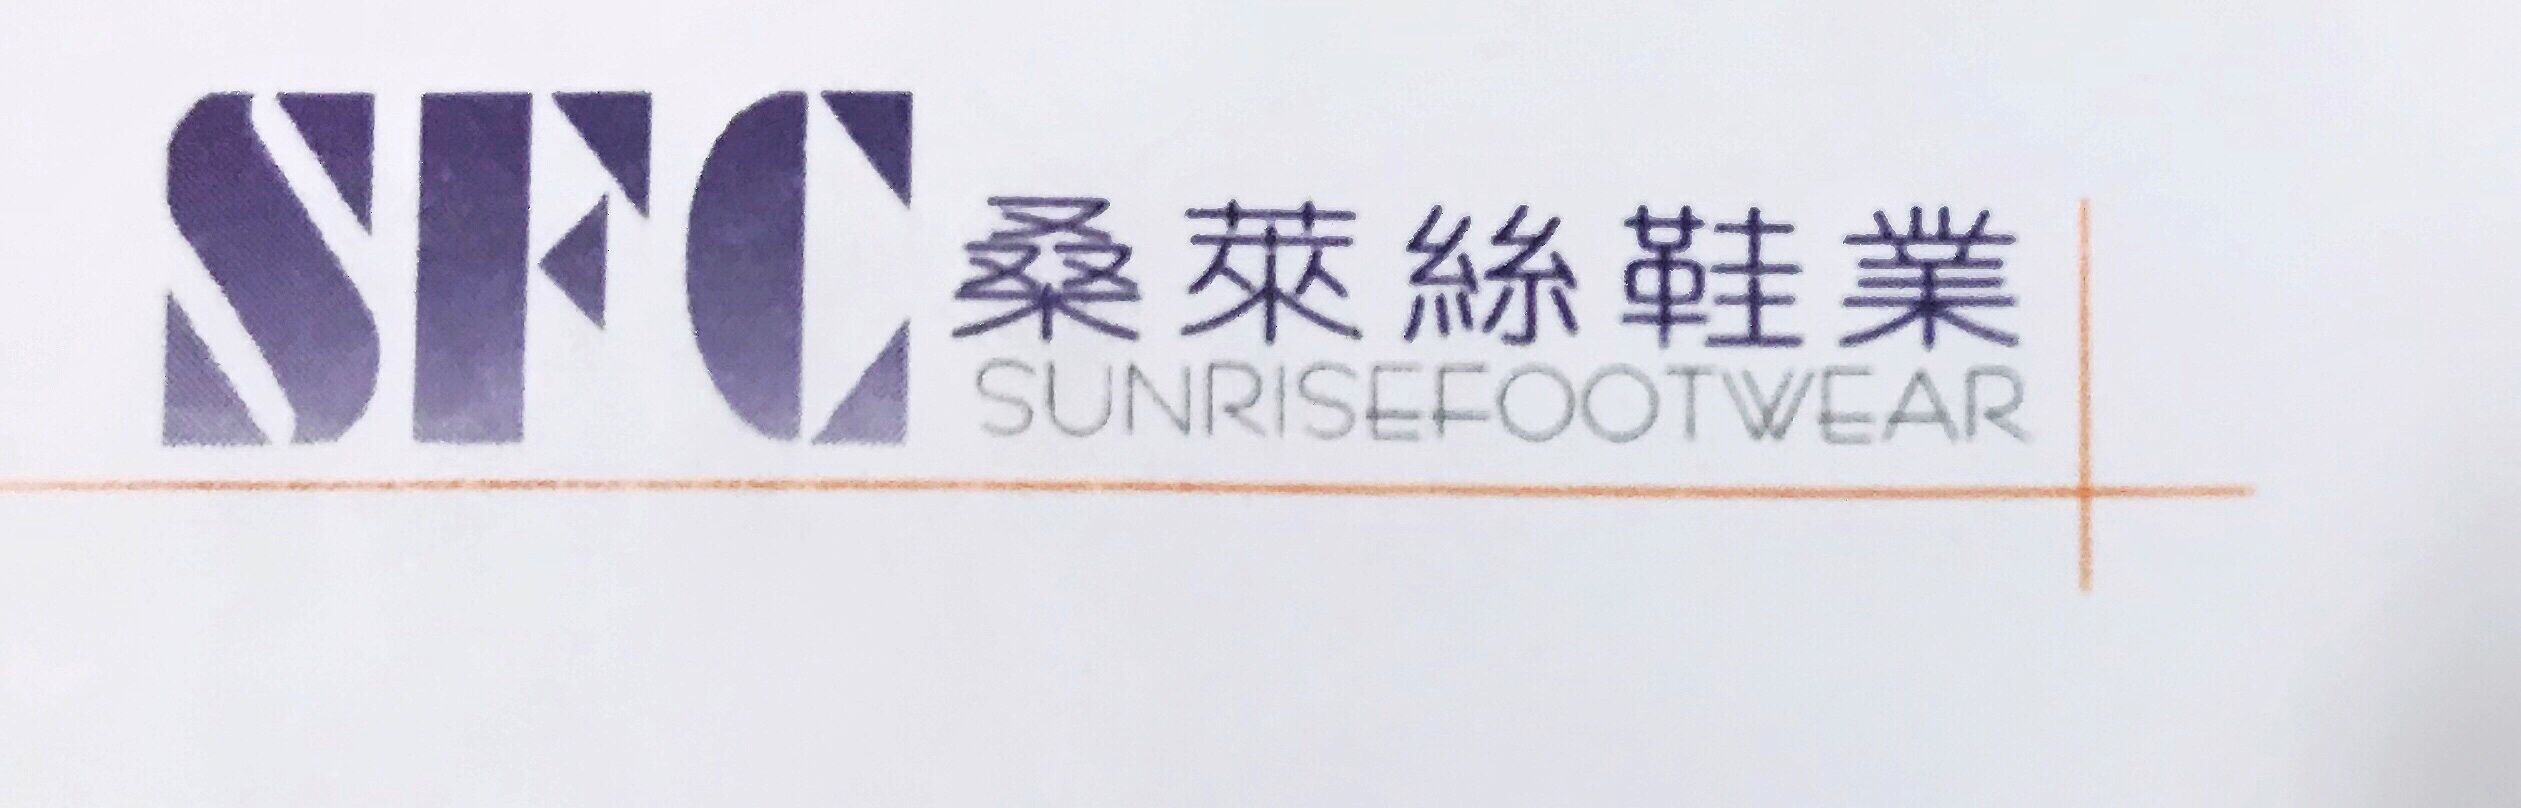 CHONGQING SUNRISE FOOTWEAR CO.,LTD.